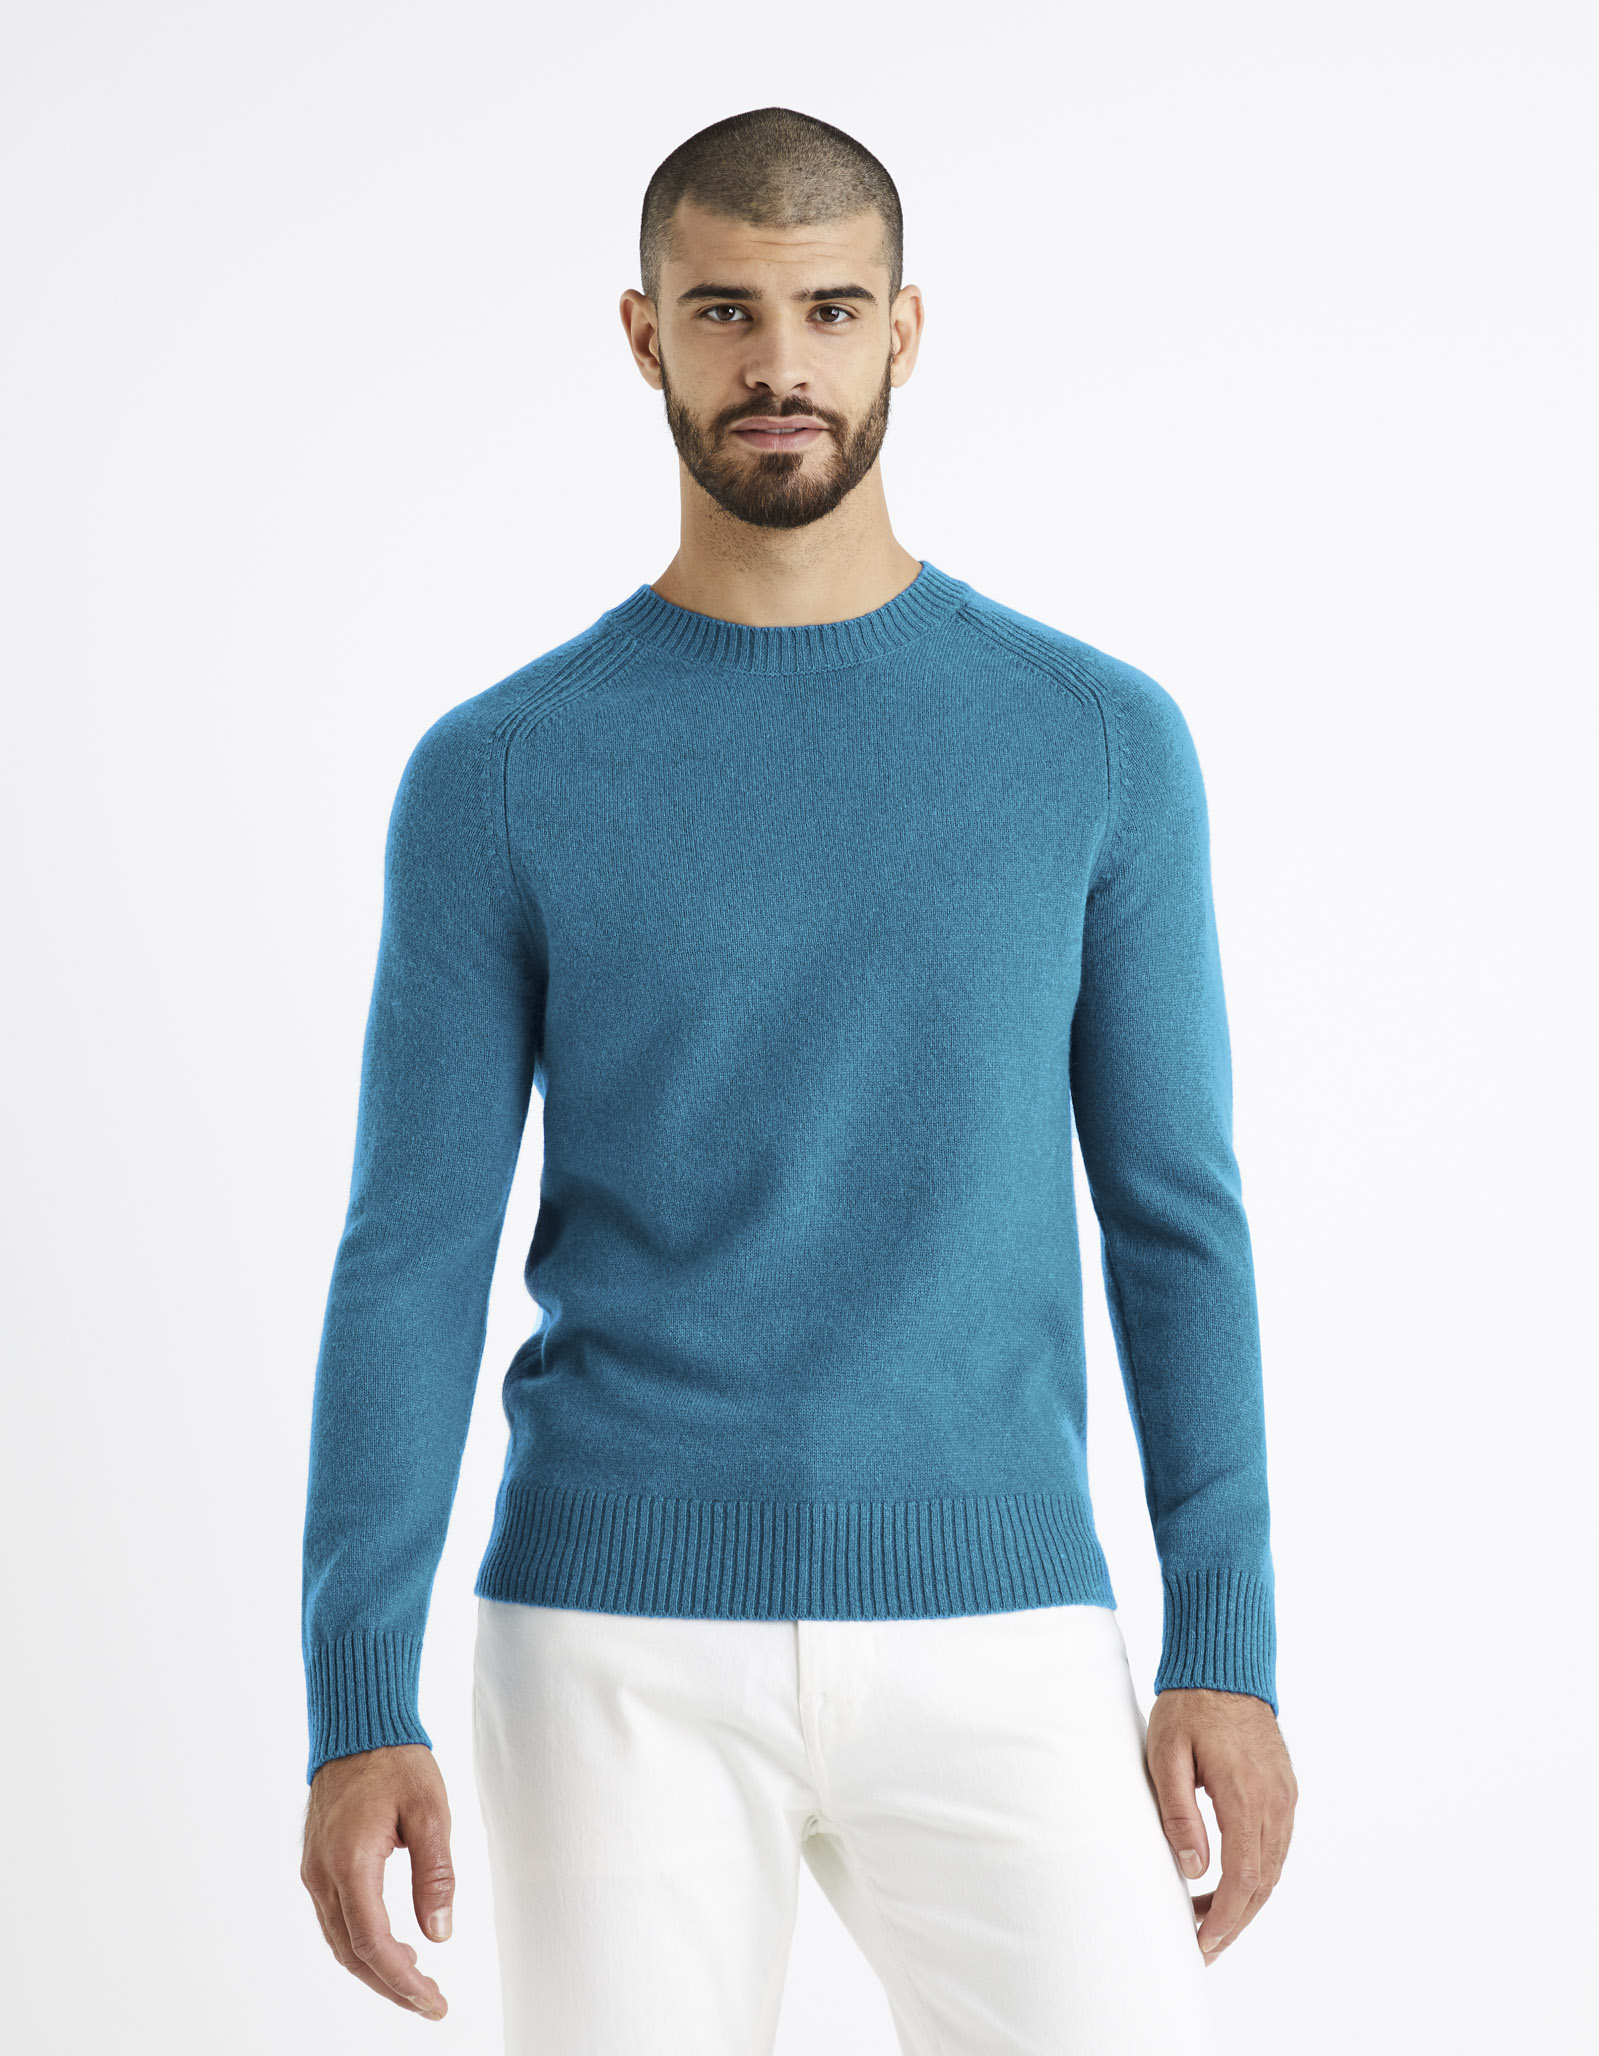 Celio Wool sweater Cevlnacam - Men's